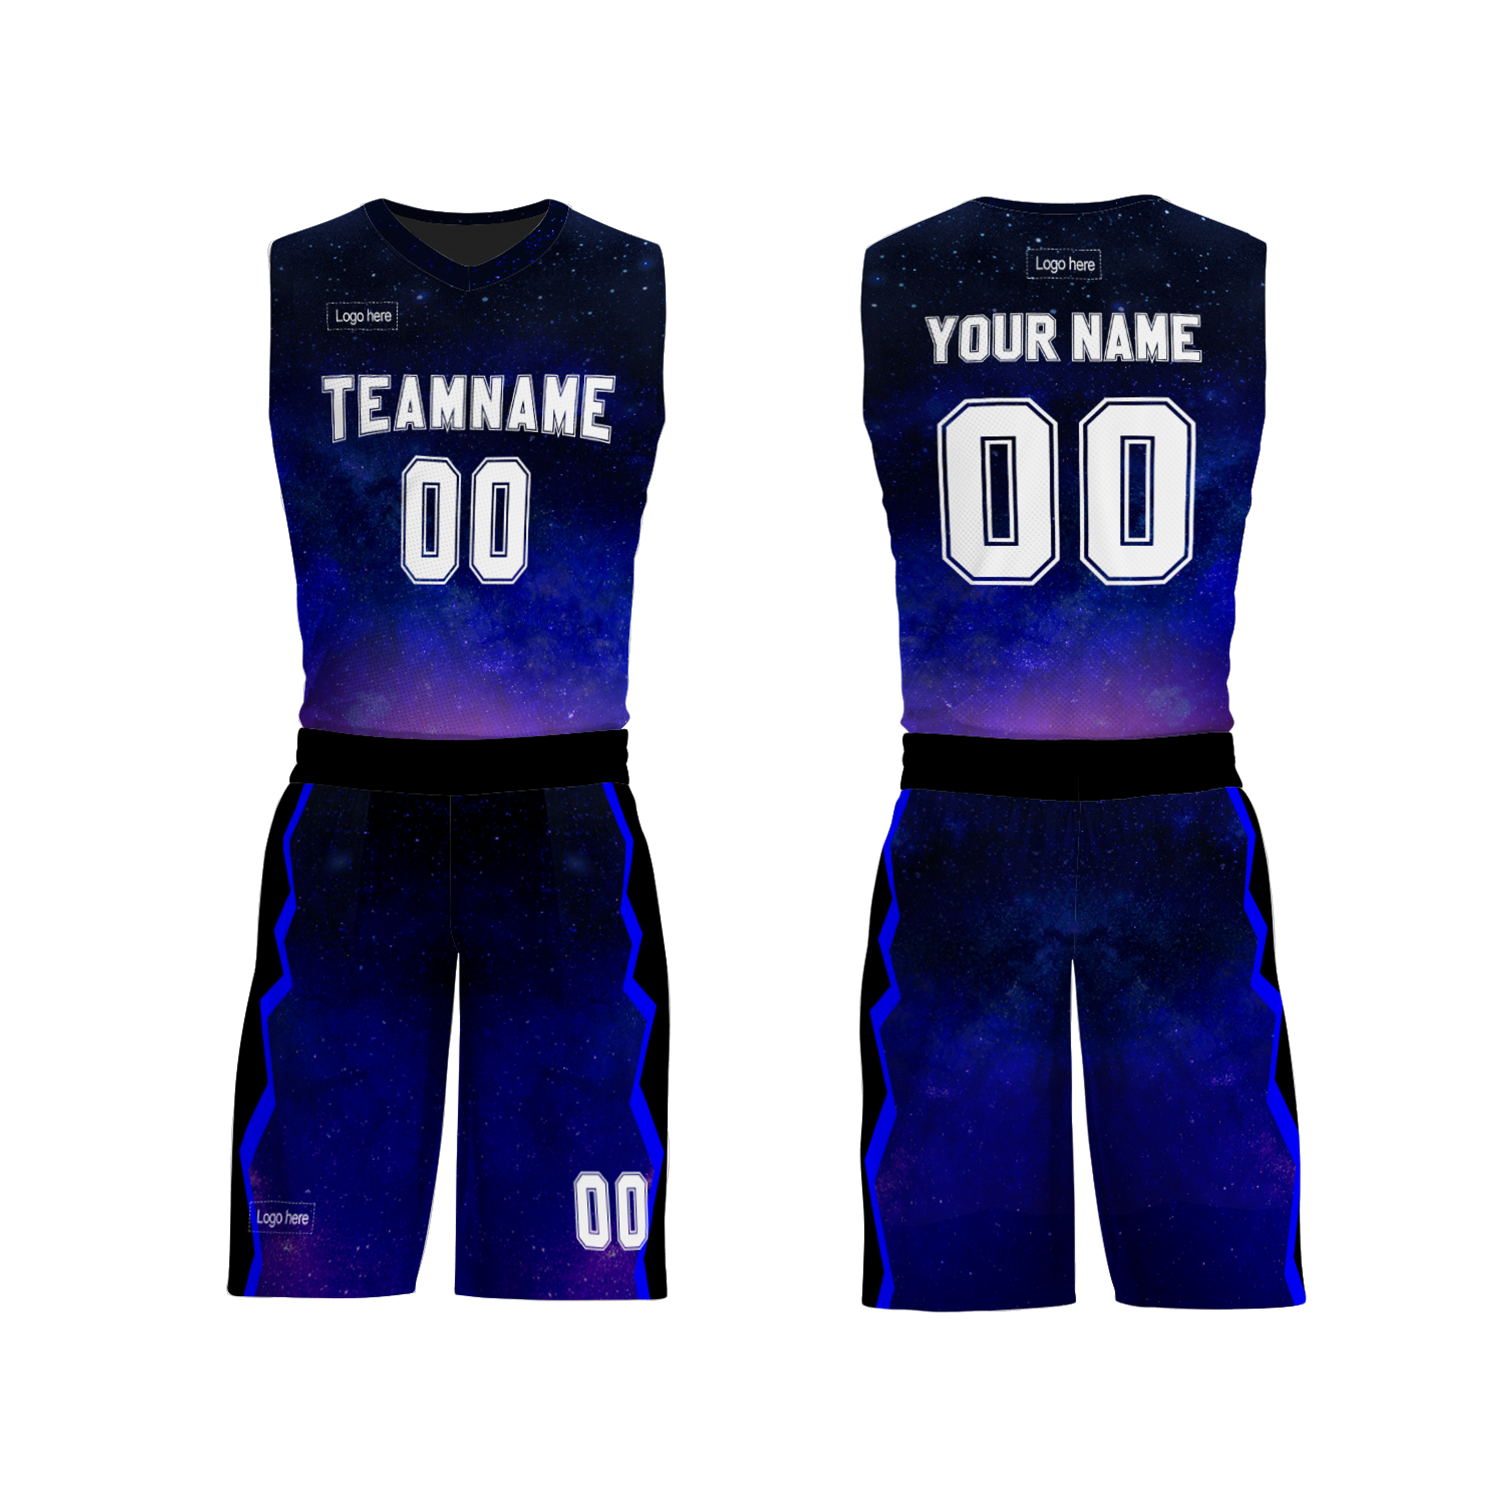 Personalized Design Customized Basketball Jersey Wholesale Blank Sublimation Basketball Wear Suit Print on Demand Uniform Cloth Set